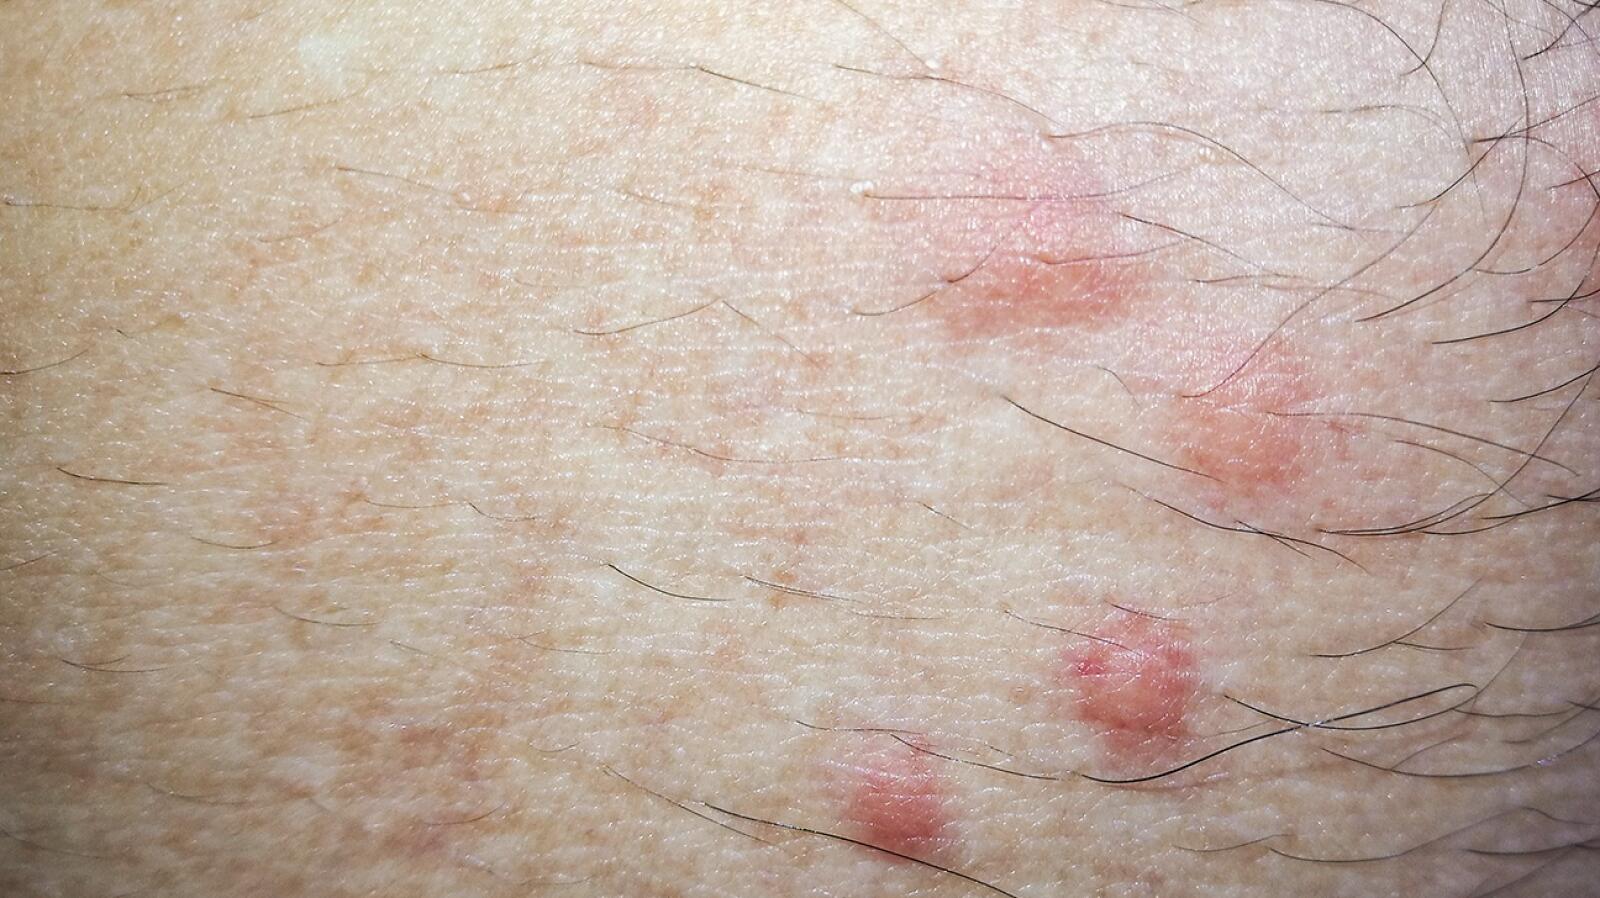 flea bites on humans pictures